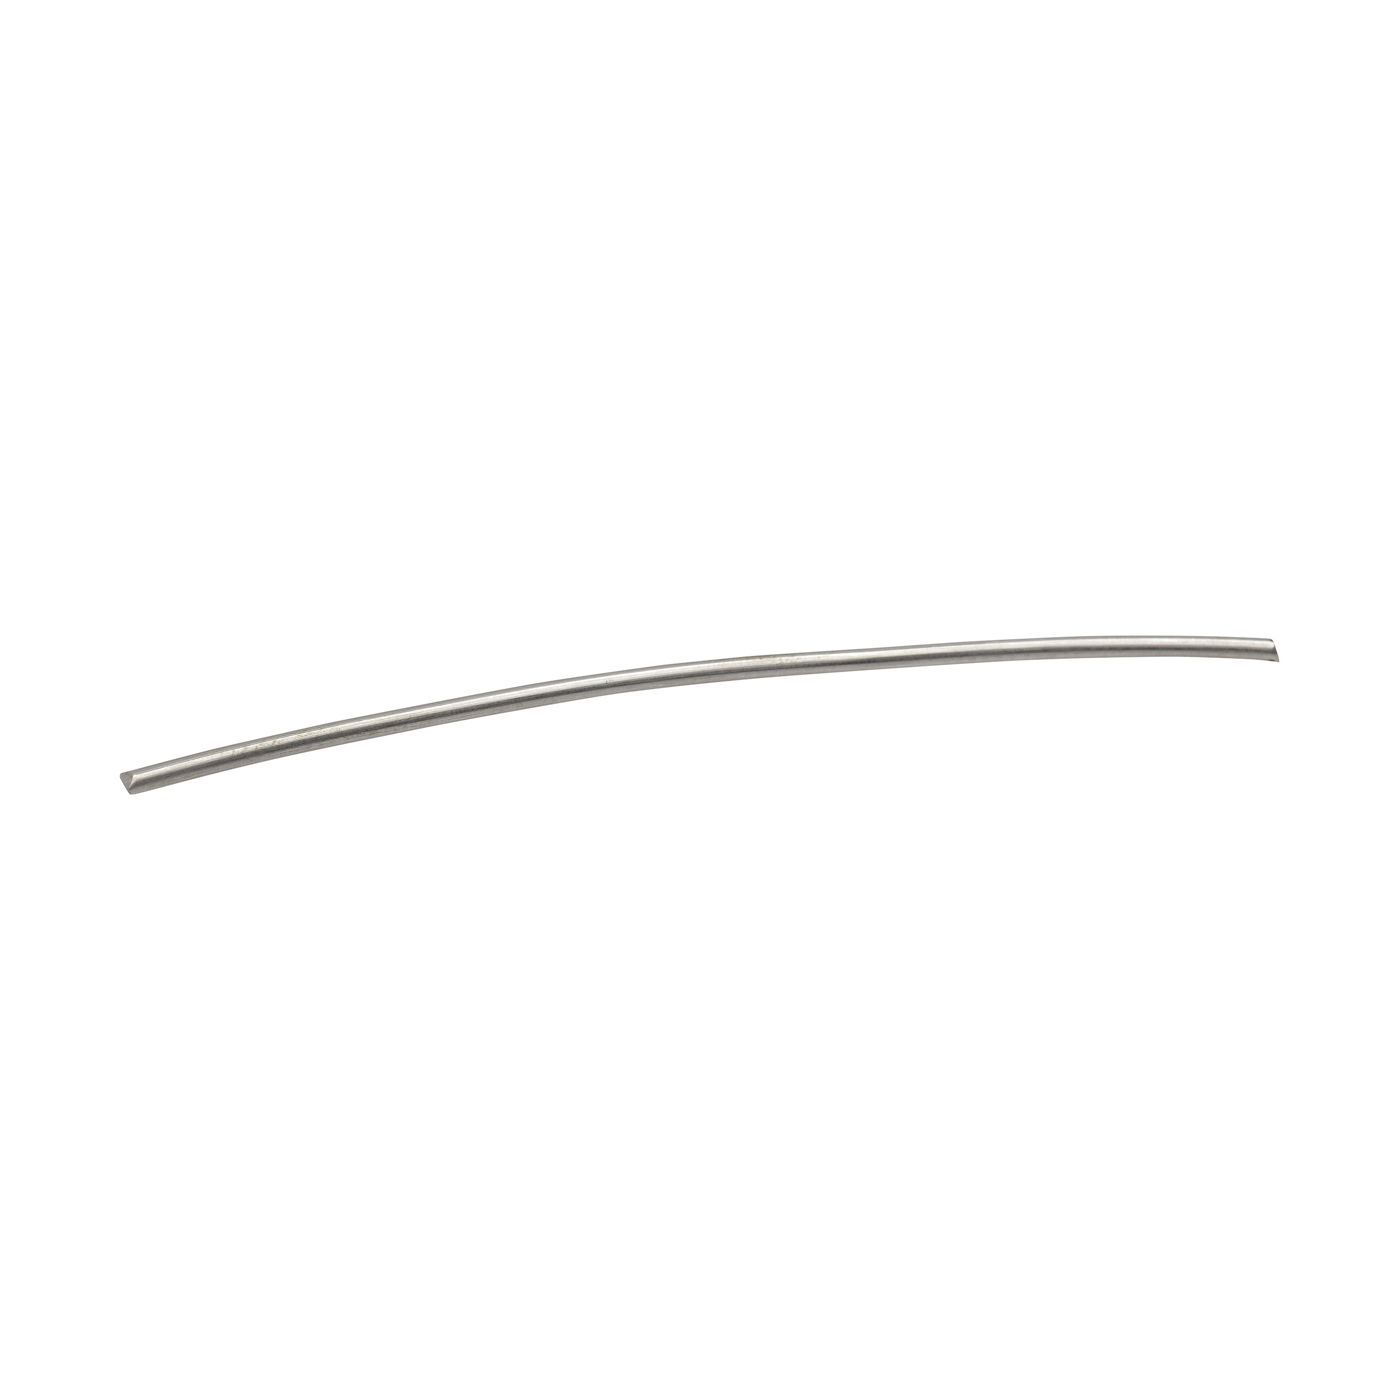 Round Wire, 925Ag, ø 3 mm, Length 10 cm - 1 piece